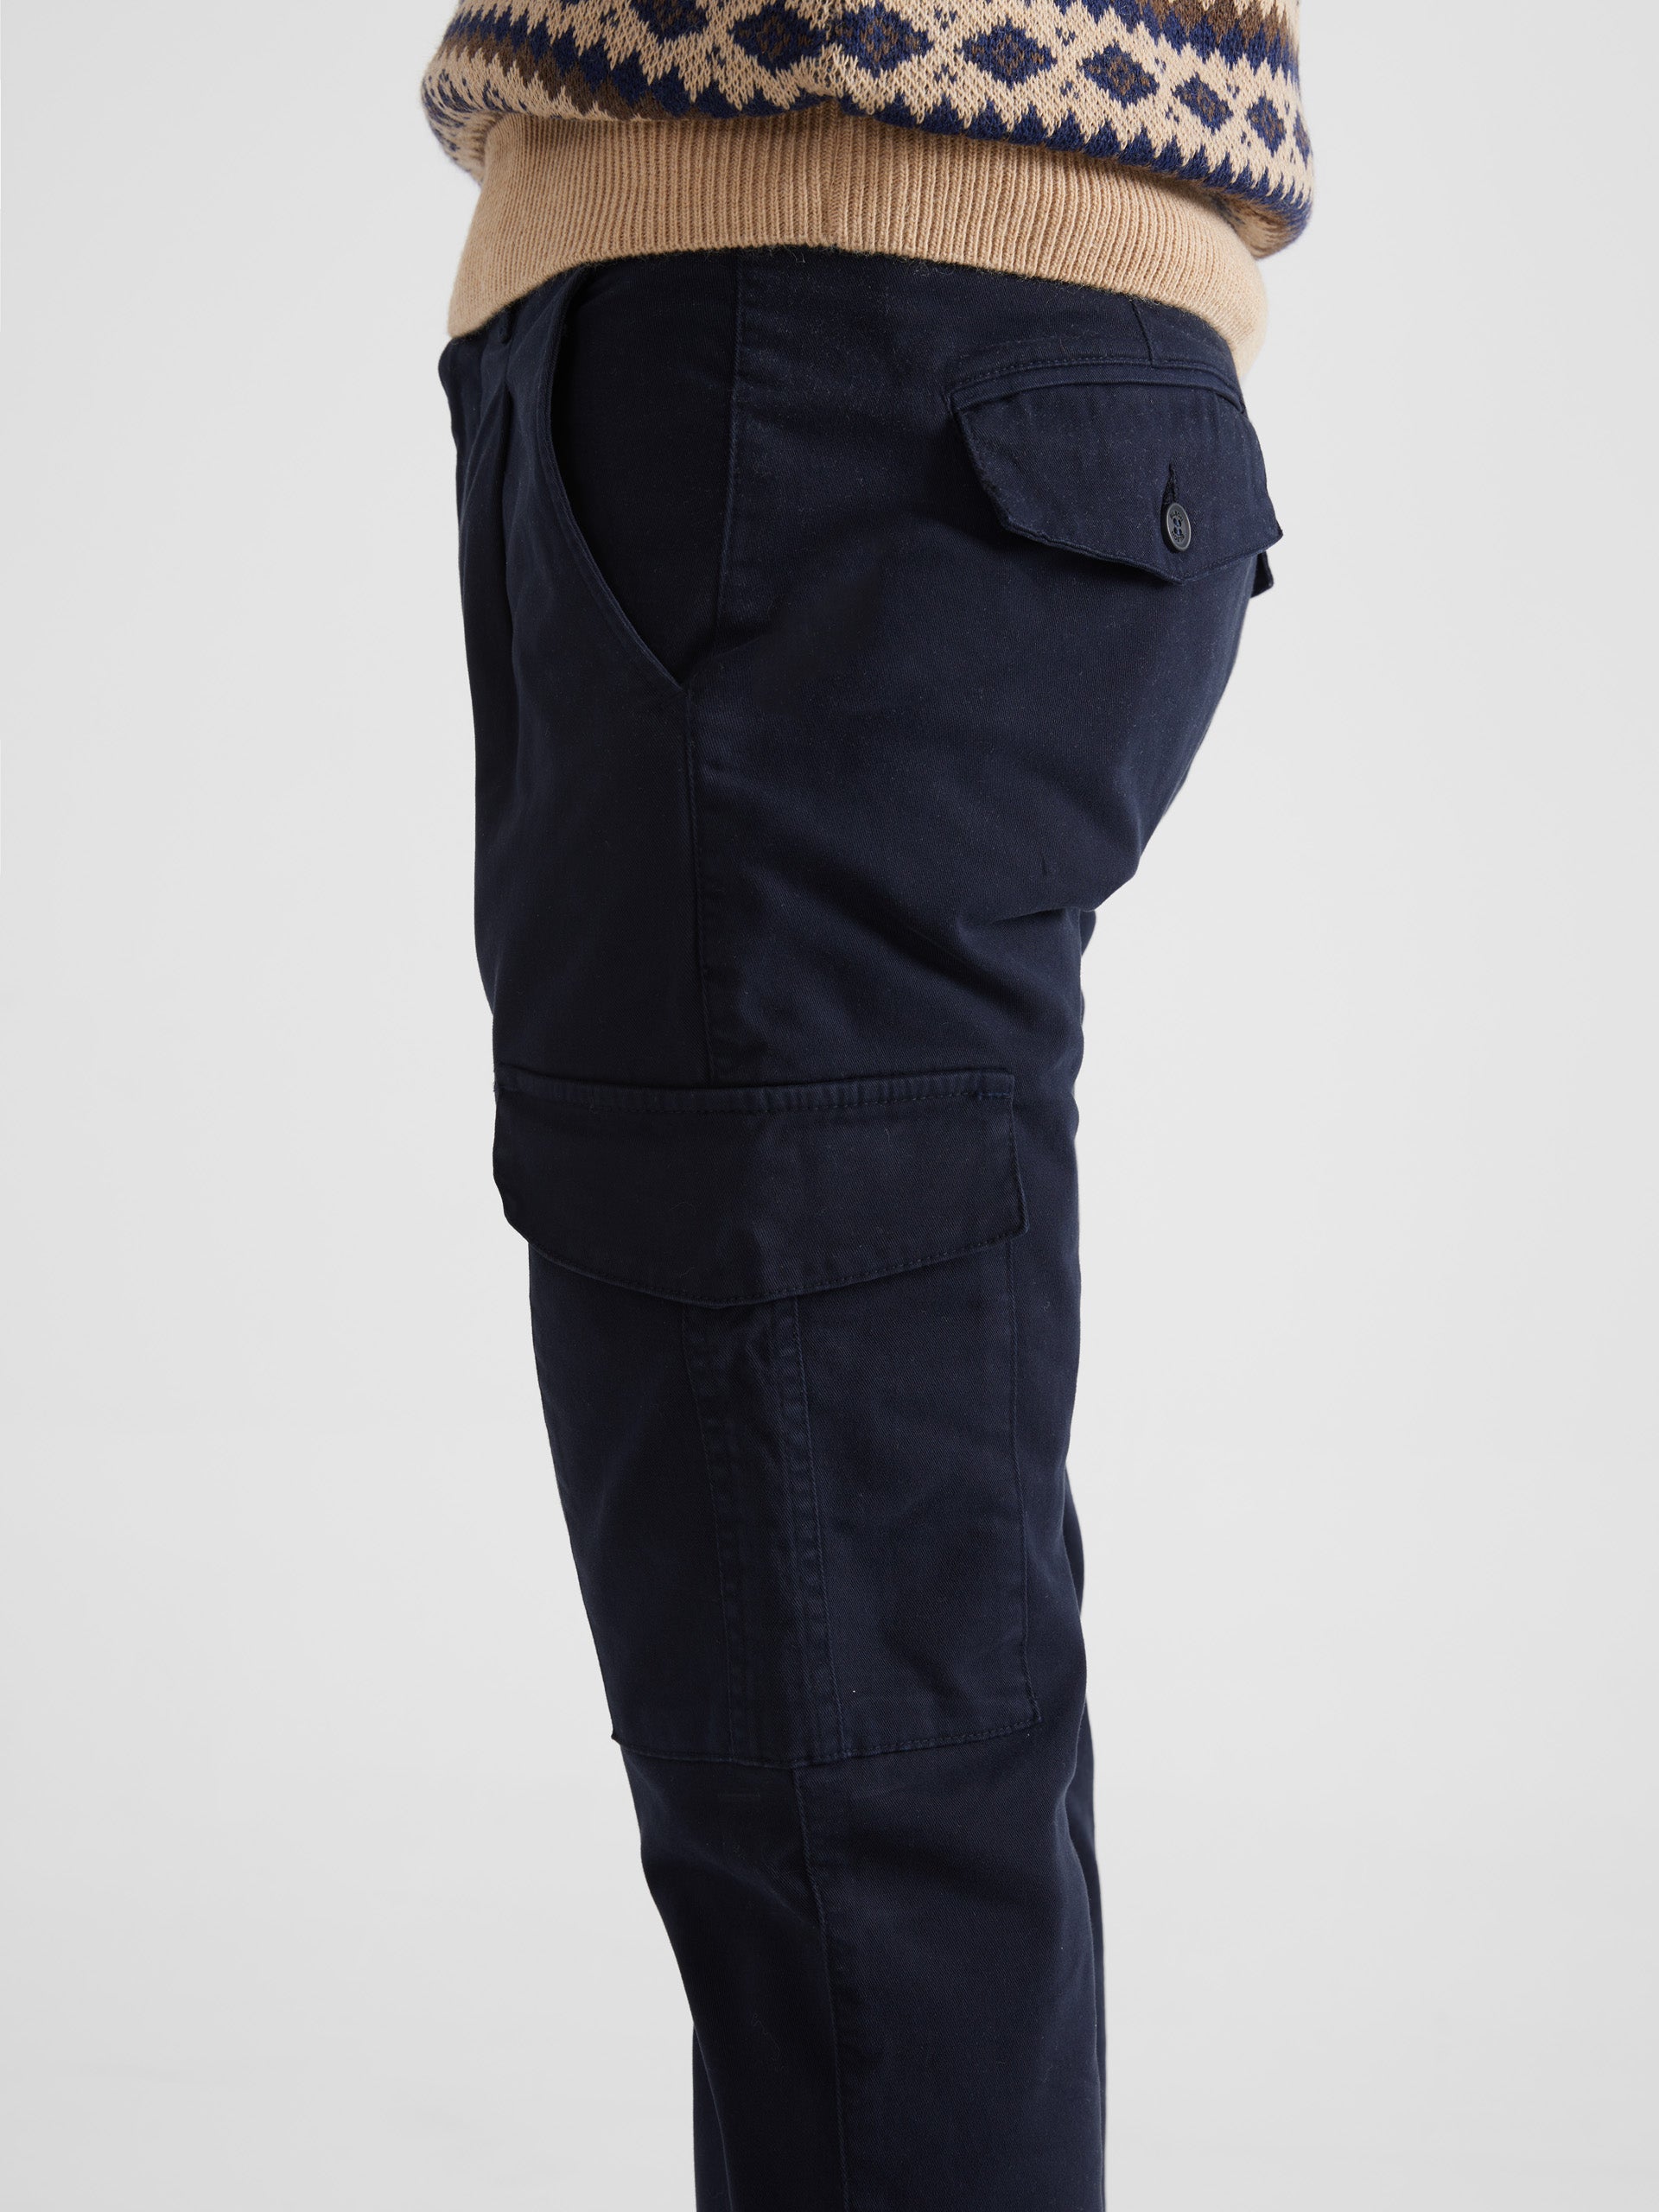 Pantalon de sport cargo plissé bleu marine foncé